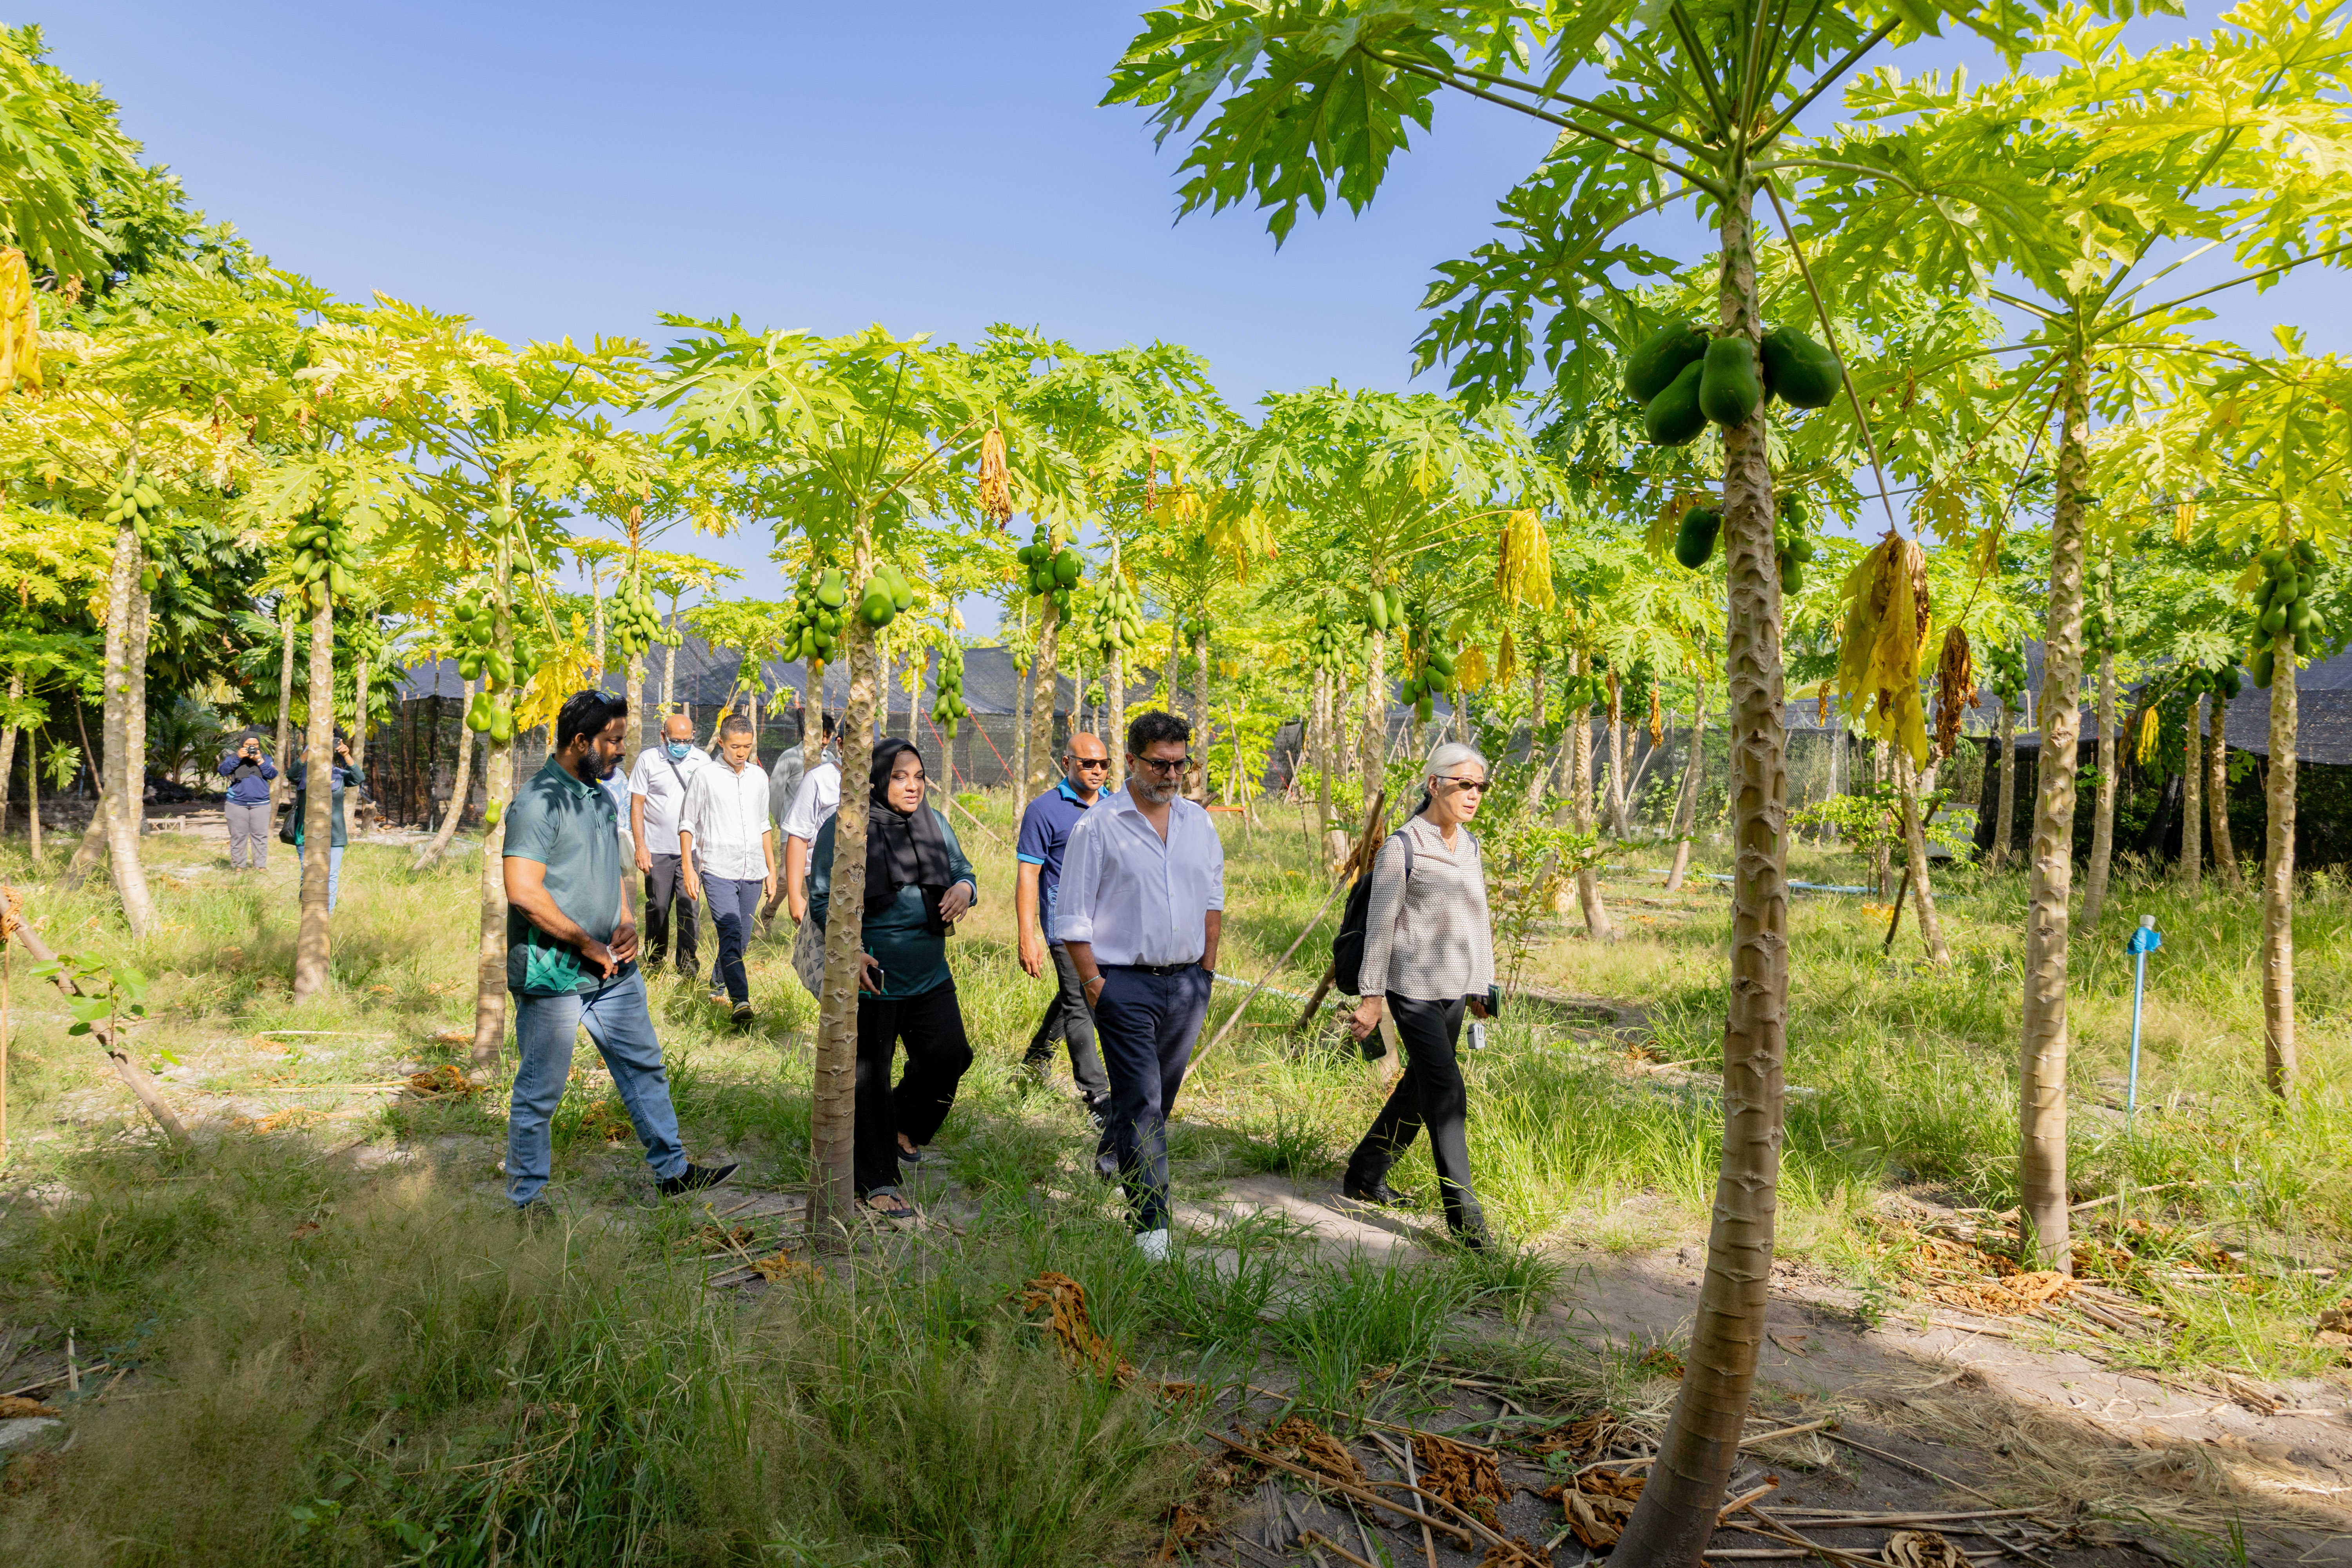 teams walking through the farms with papaya plants